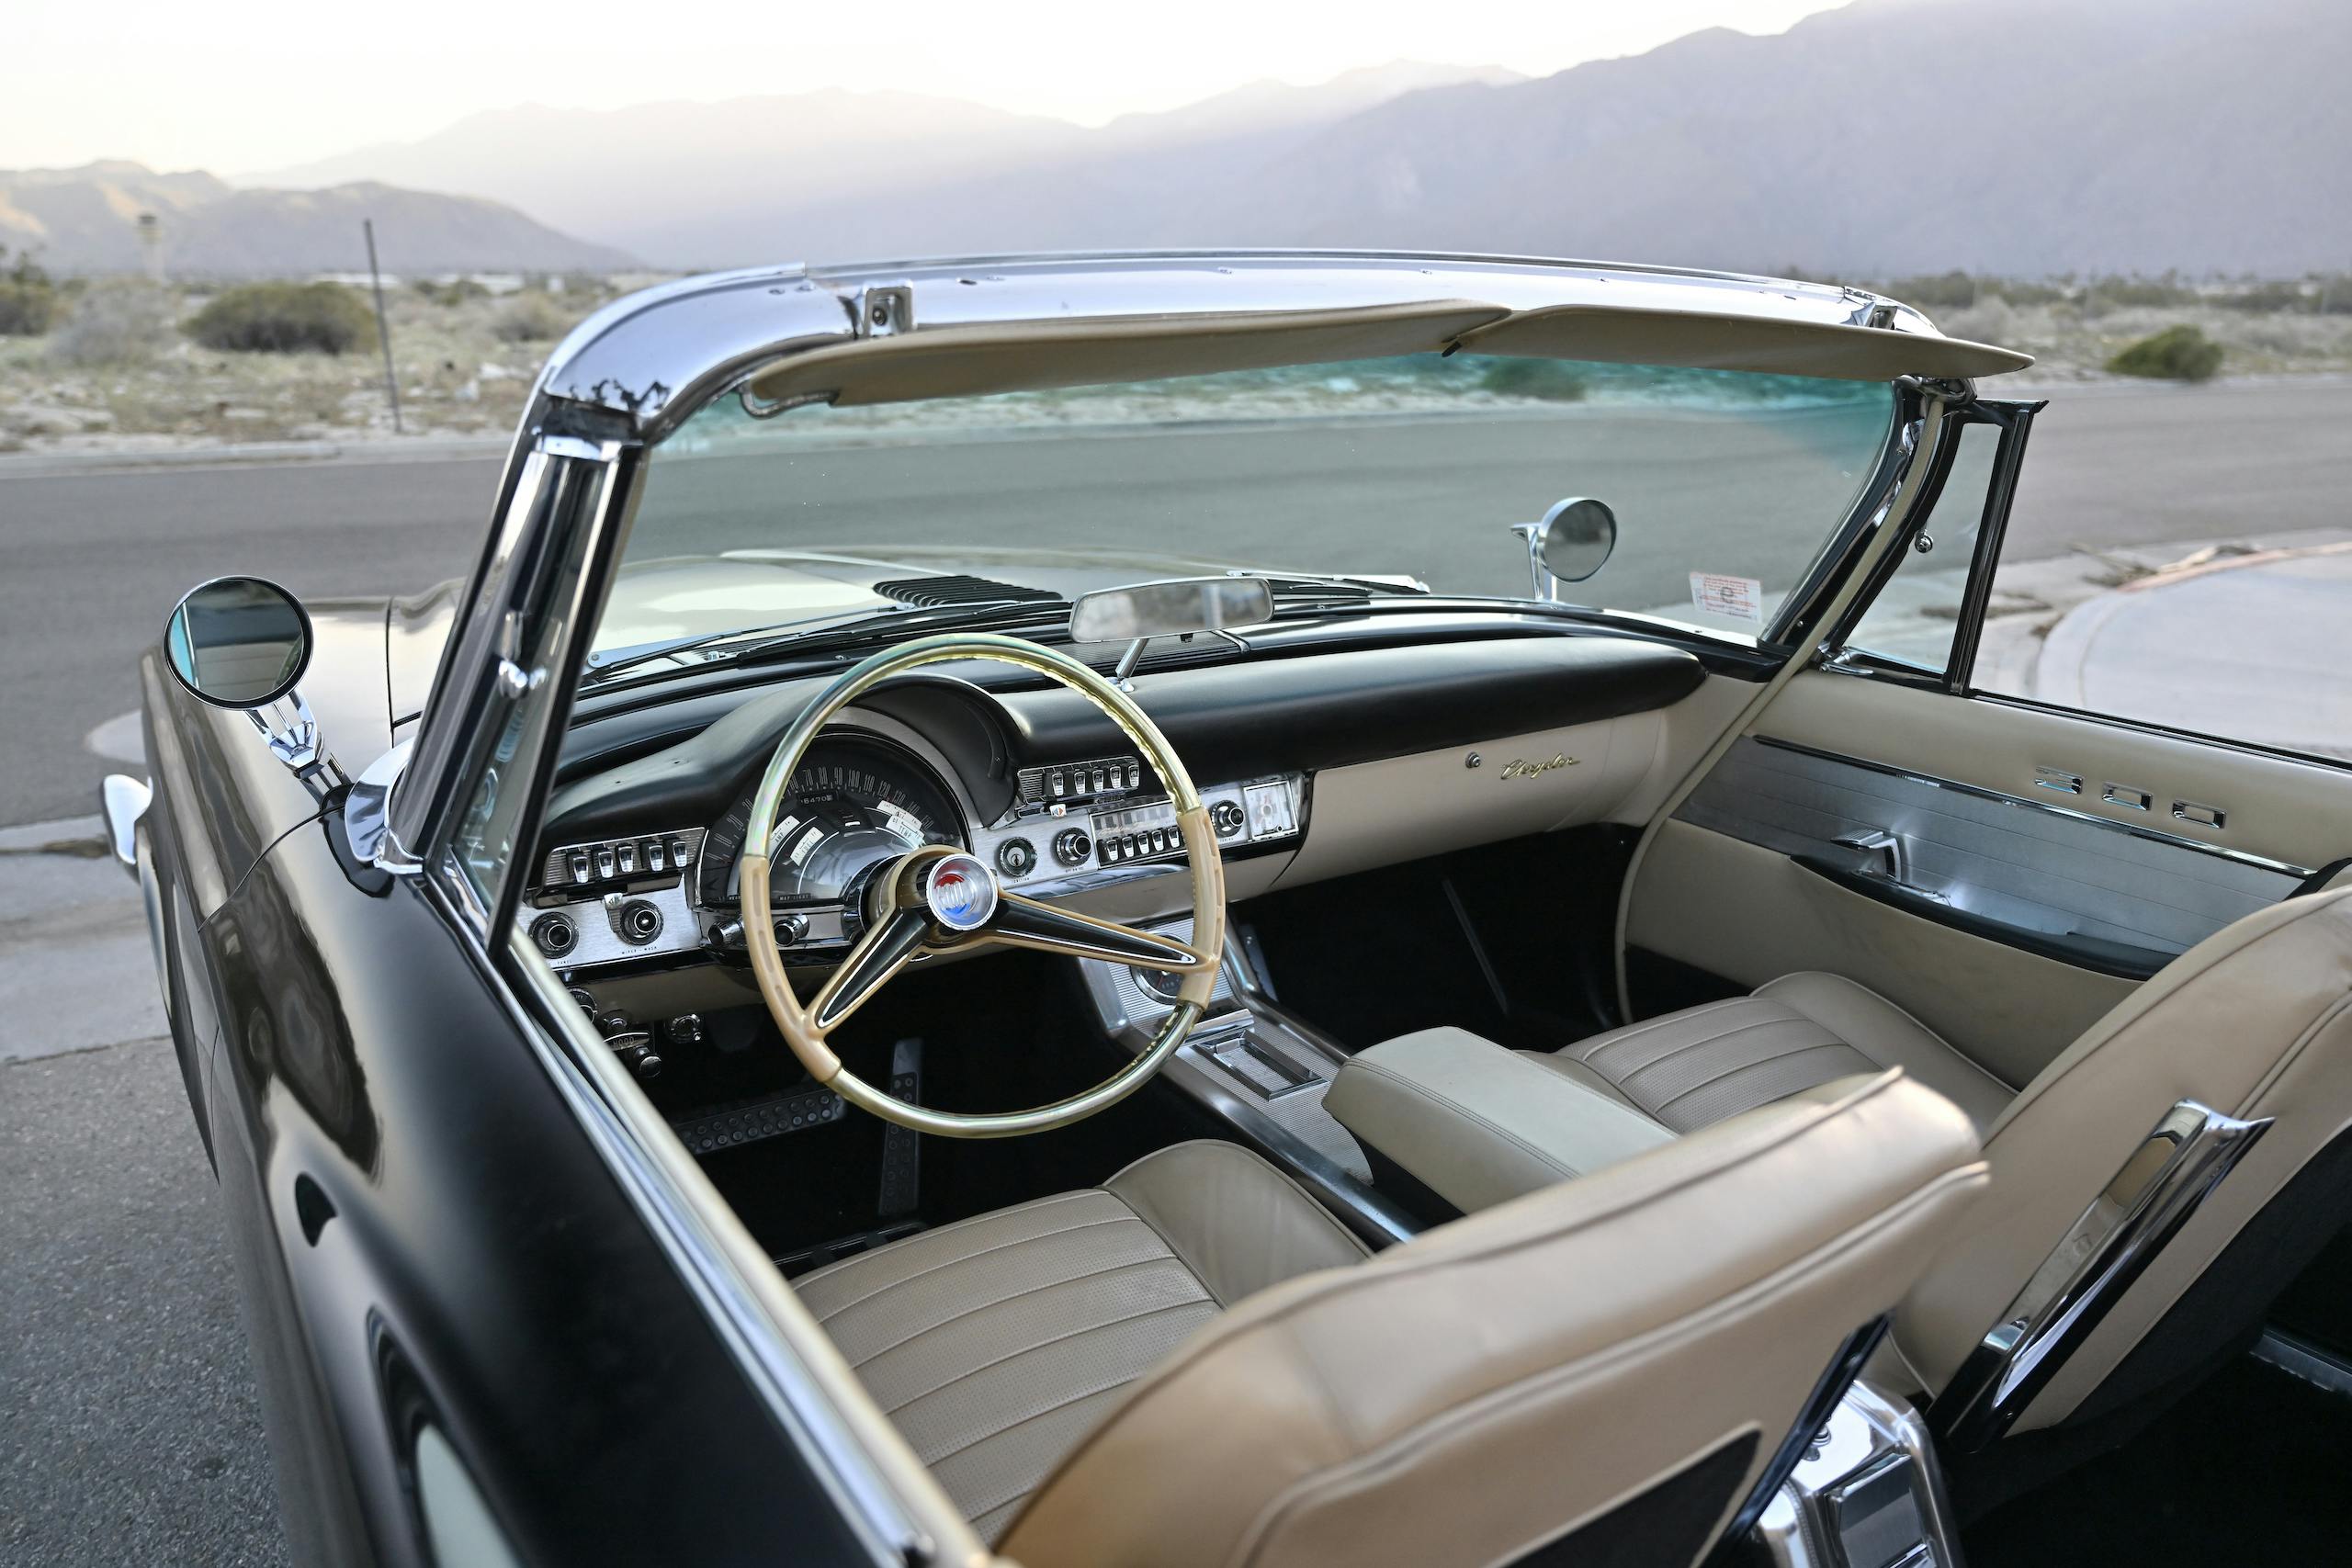 Chrysler classic convertible interior